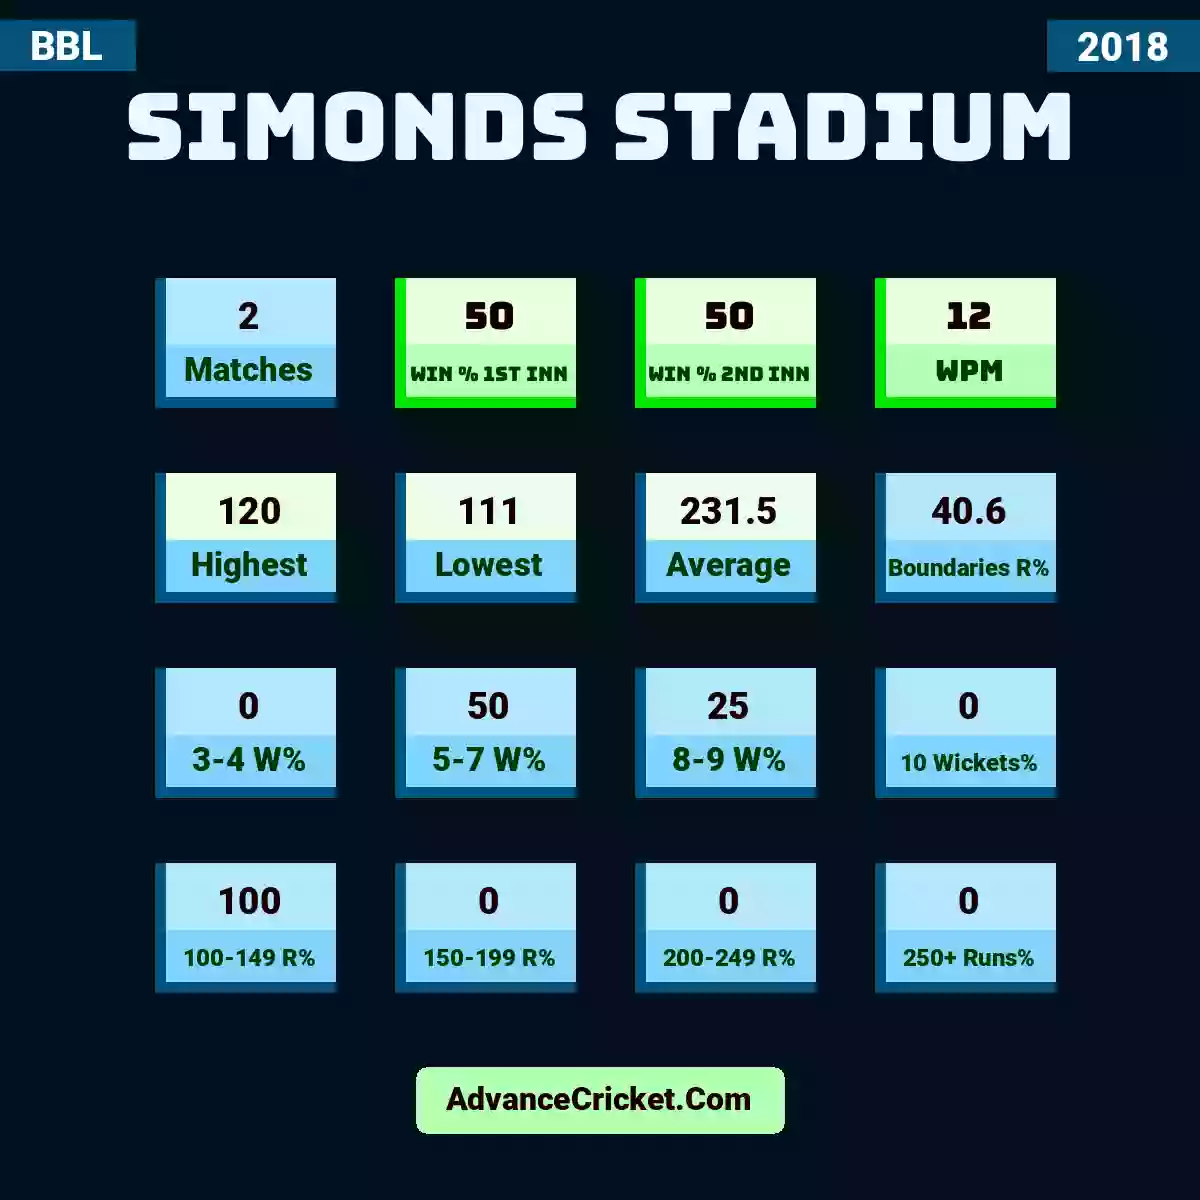 Image showing Simonds Stadium with Matches: 2, Win % 1st Inn: 50, Win % 2nd Inn: 50, WPM: 12, Highest: 120, Lowest: 111, Average: 231.5, Boundaries R%: 40.6, 3-4 W%: 0, 5-7 W%: 50, 8-9 W%: 25, 10 Wickets%: 0, 100-149 R%: 100, 150-199 R%: 0, 200-249 R%: 0, 250+ Runs%: 0.